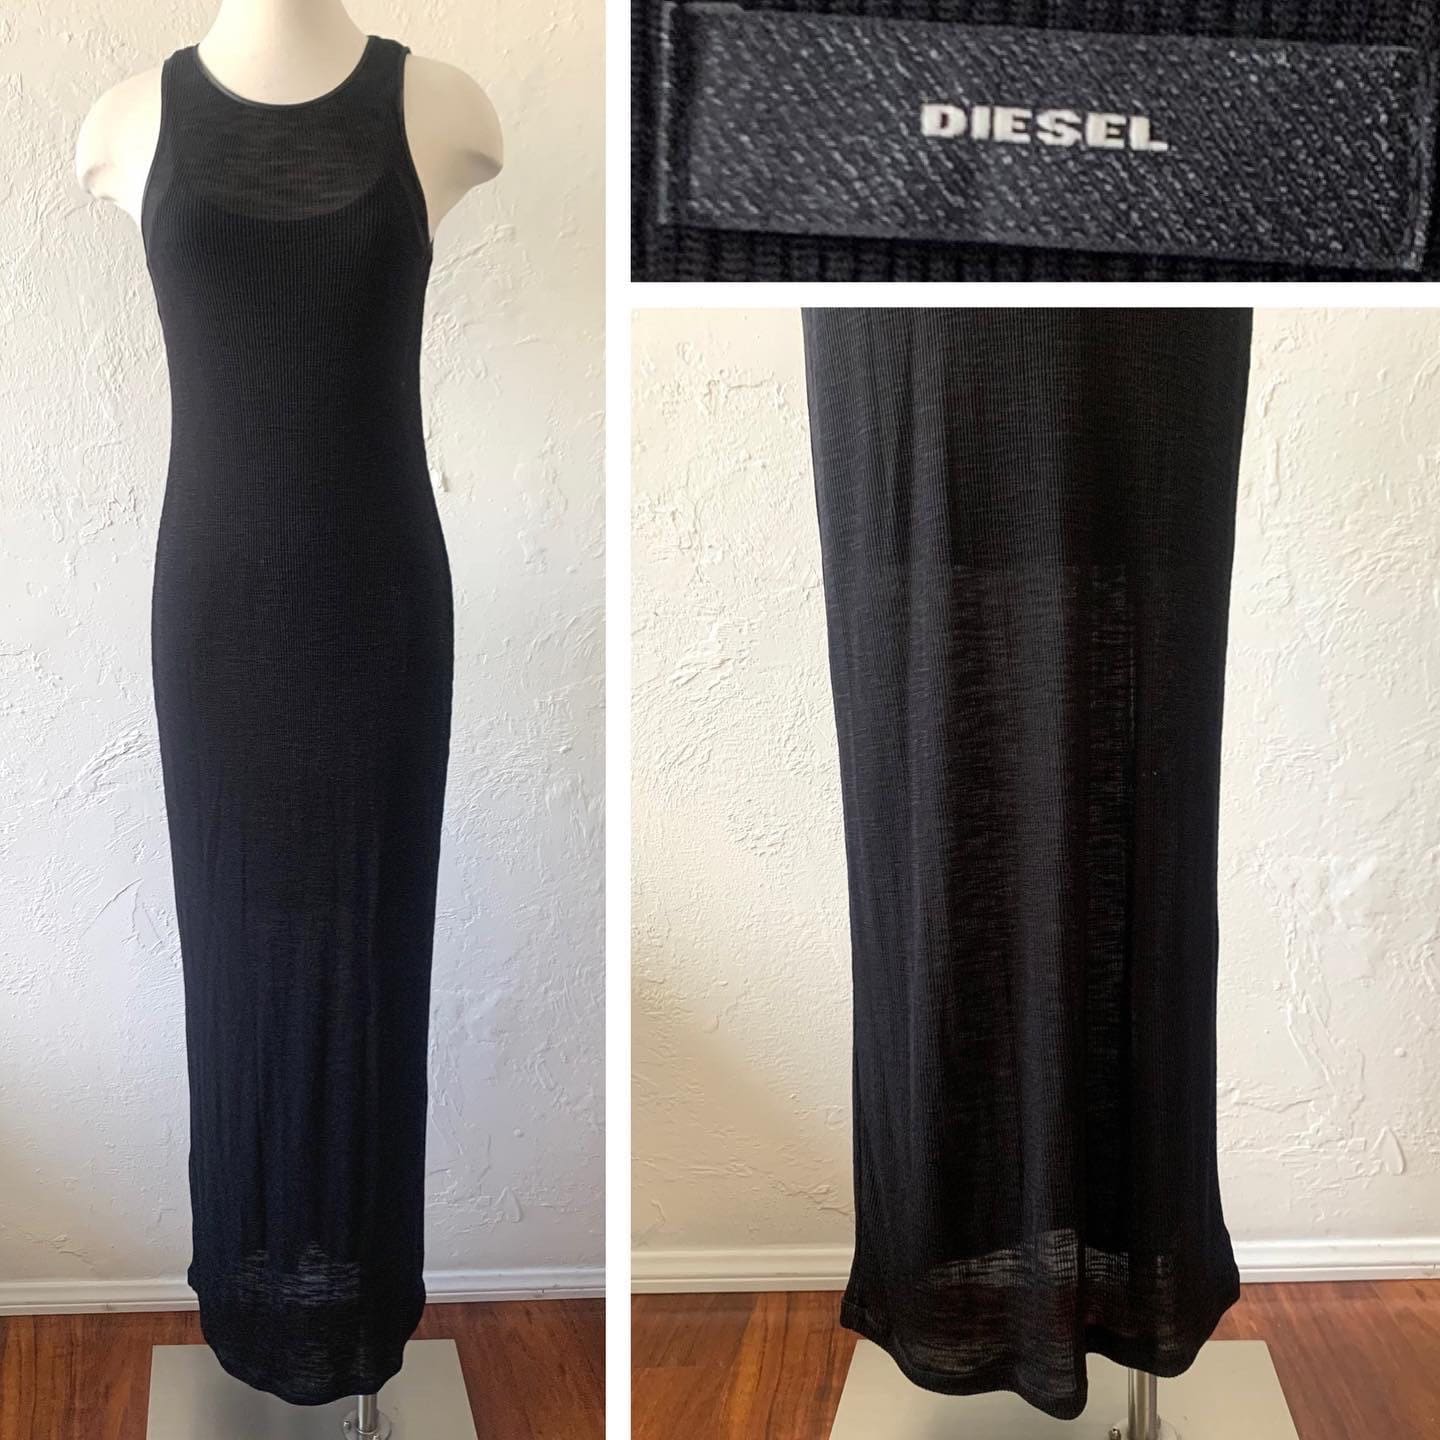 Seneste nyt finansiere Do Diesel Vintage Dress - Etsy